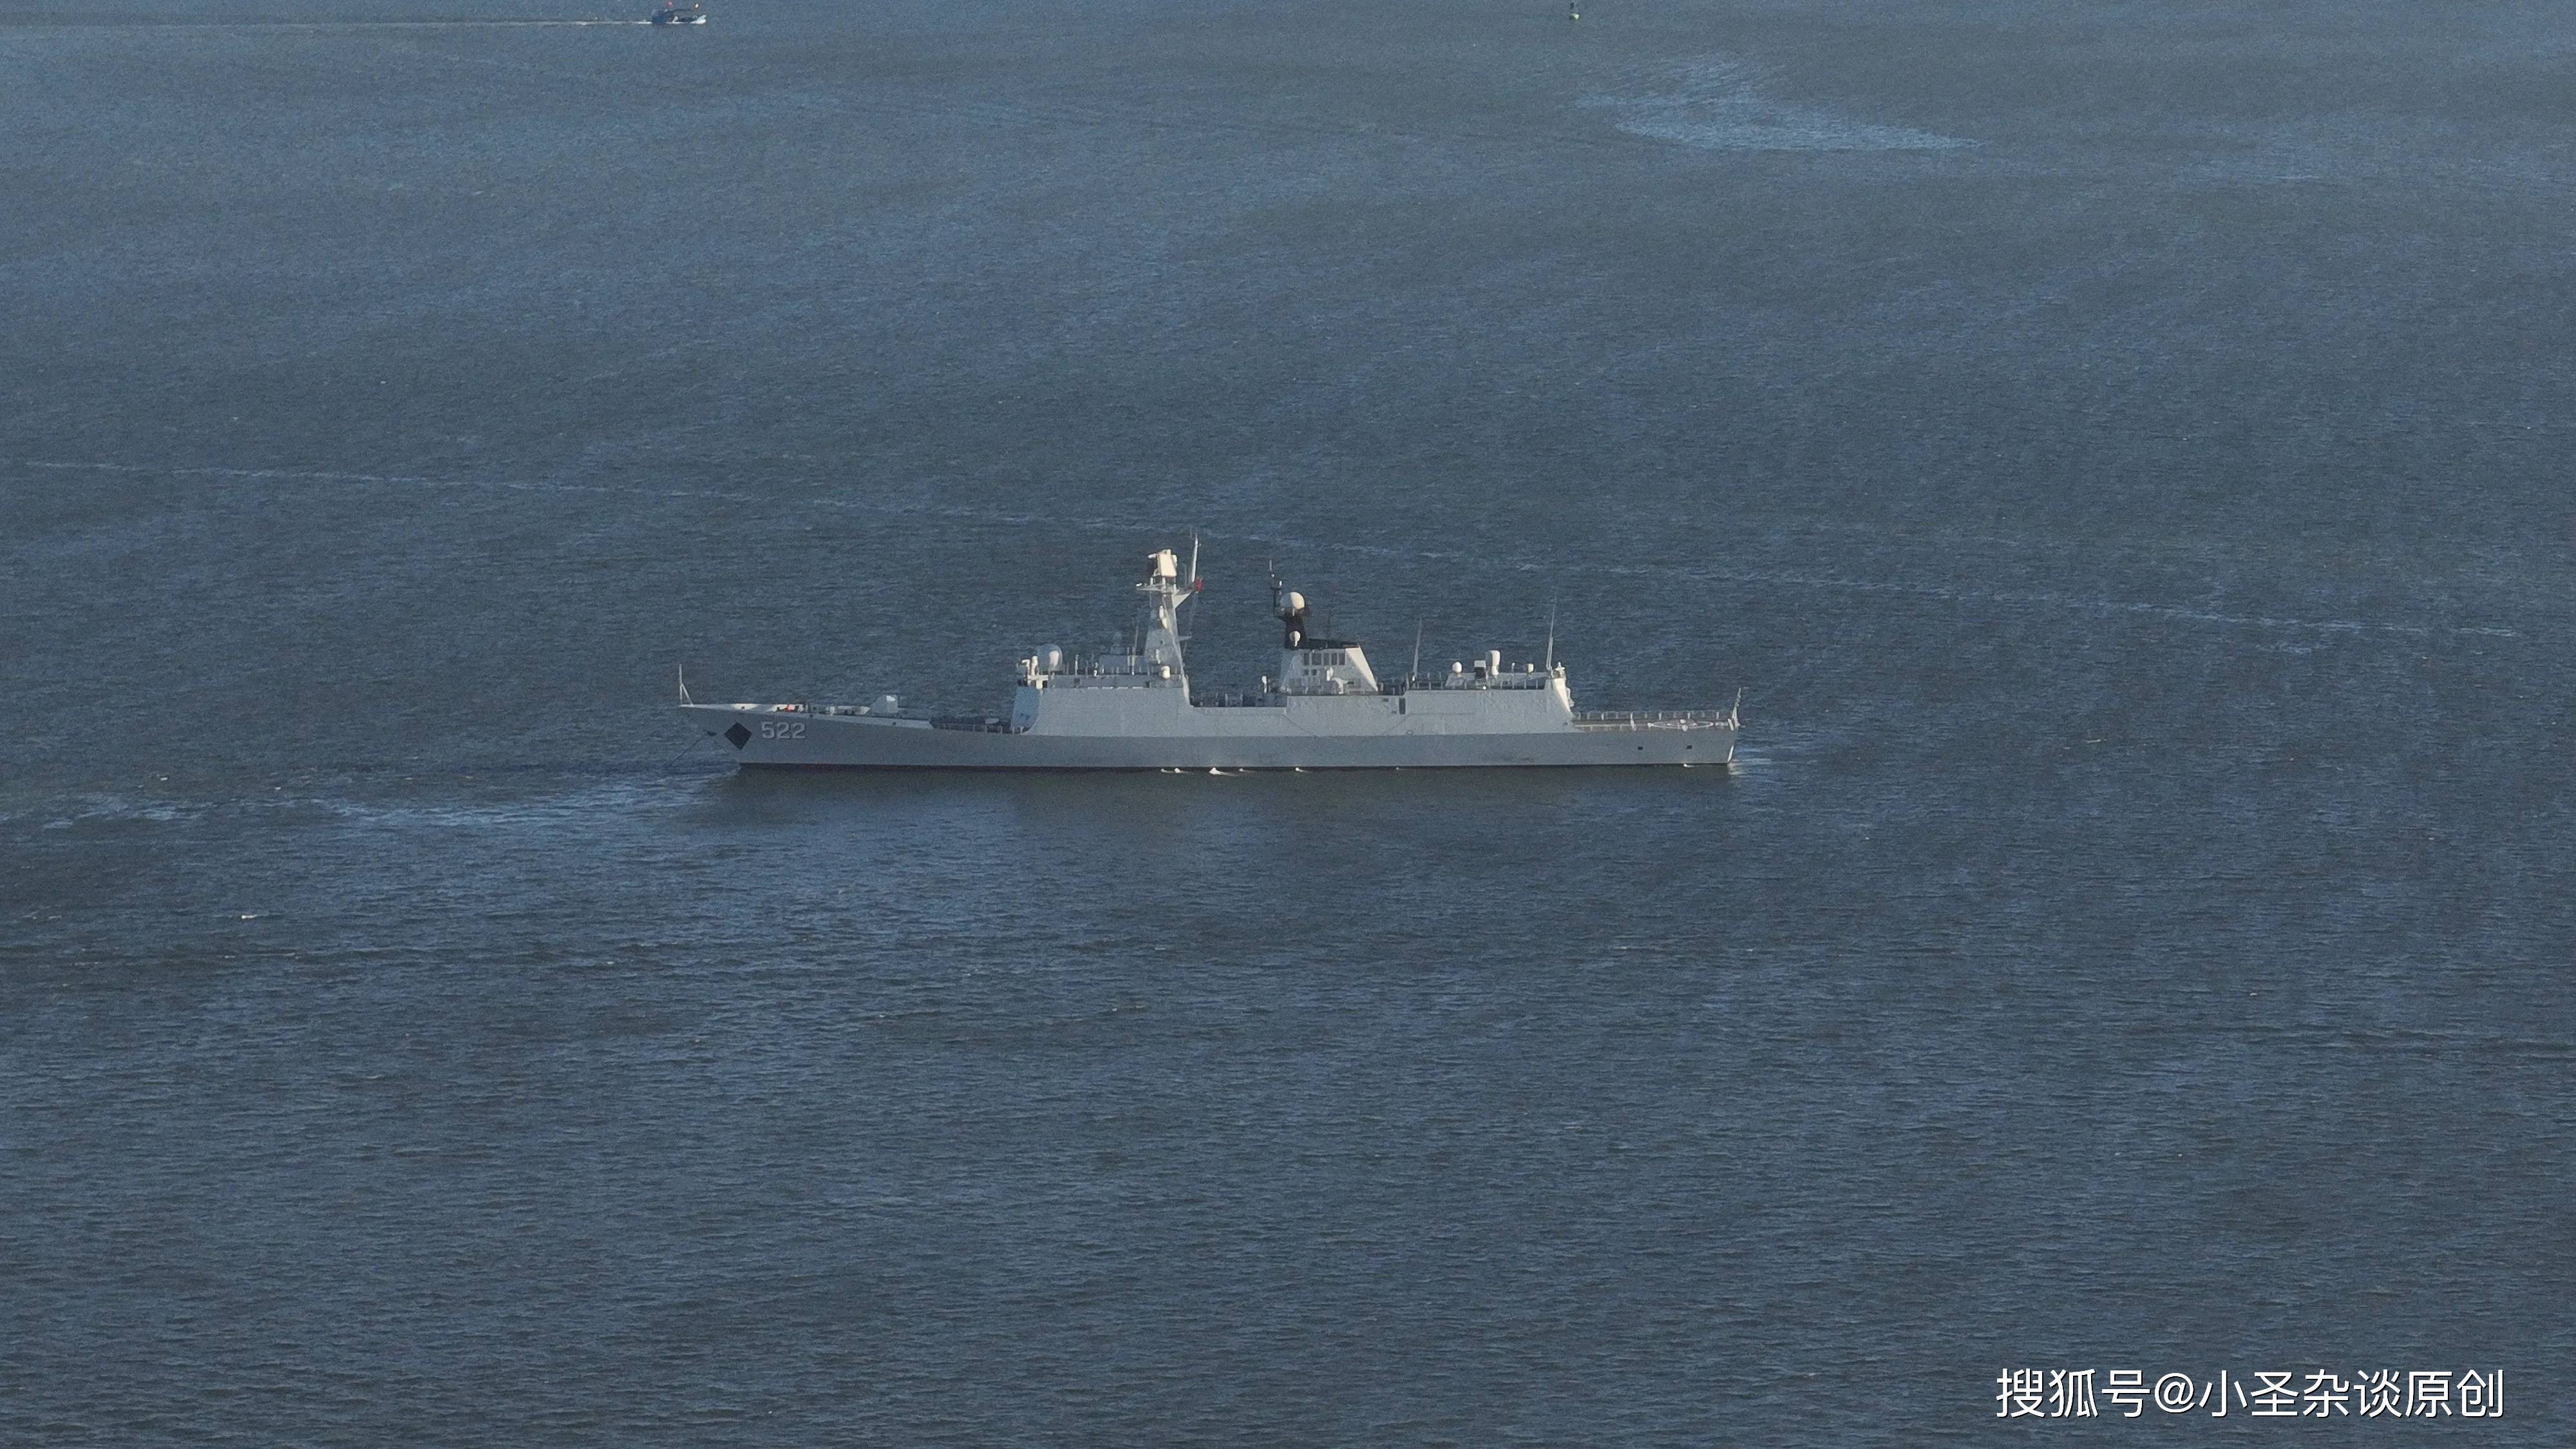 054a追加建造20艘,造价便宜,性能却接近052d的一半,海军很青睐!